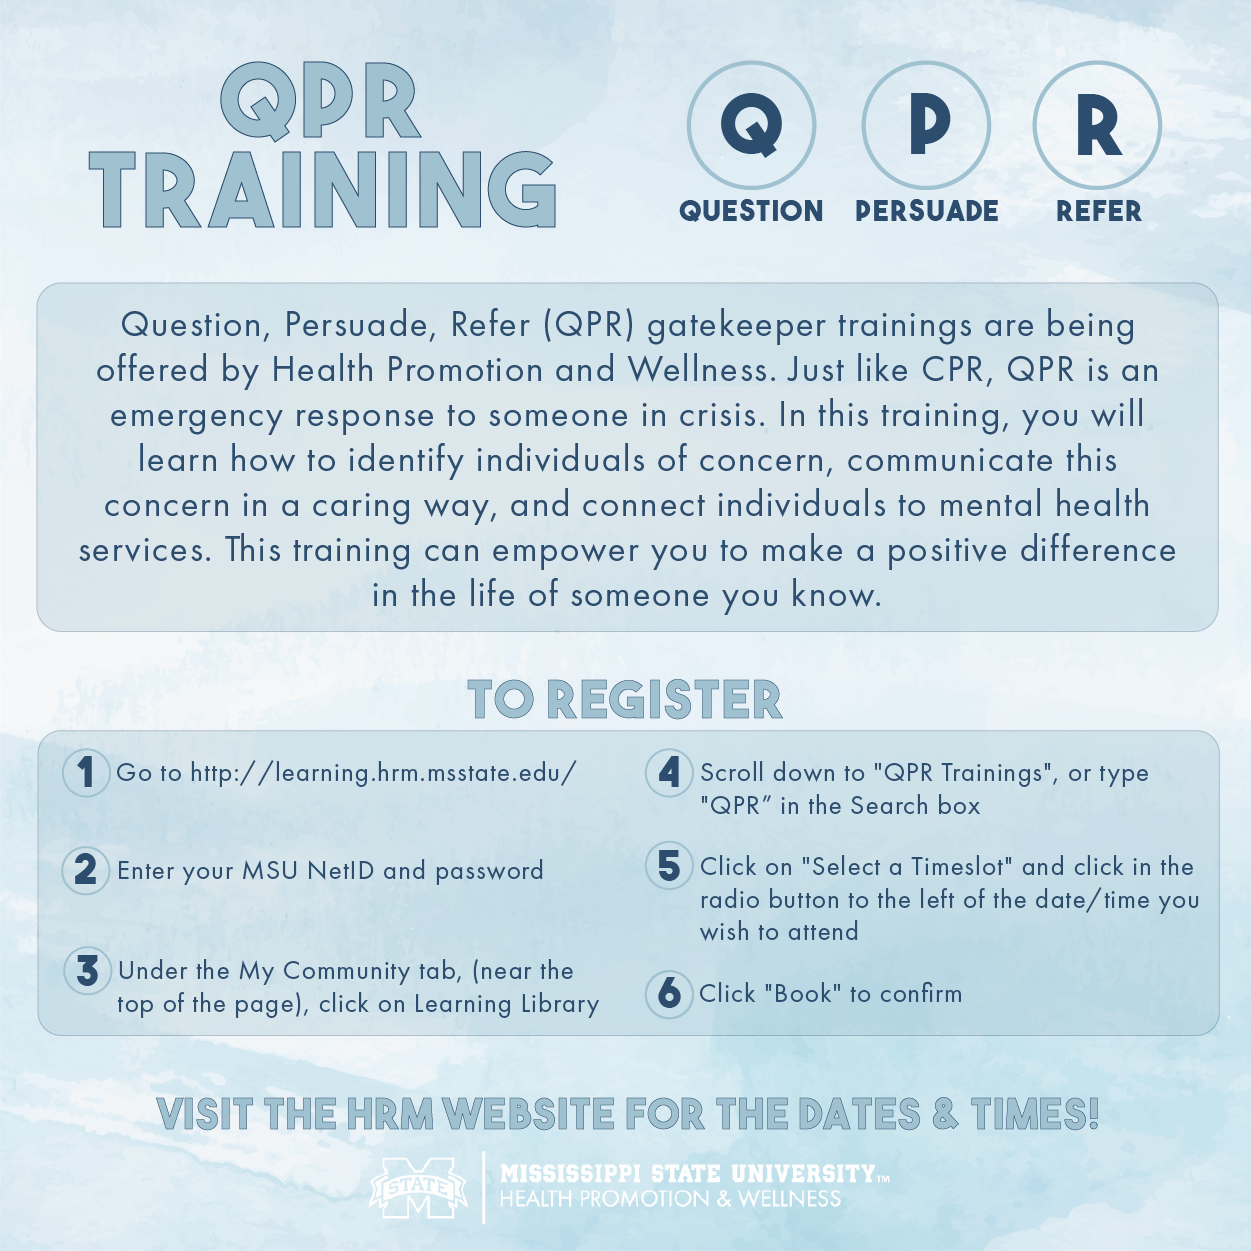 QPR training flyer